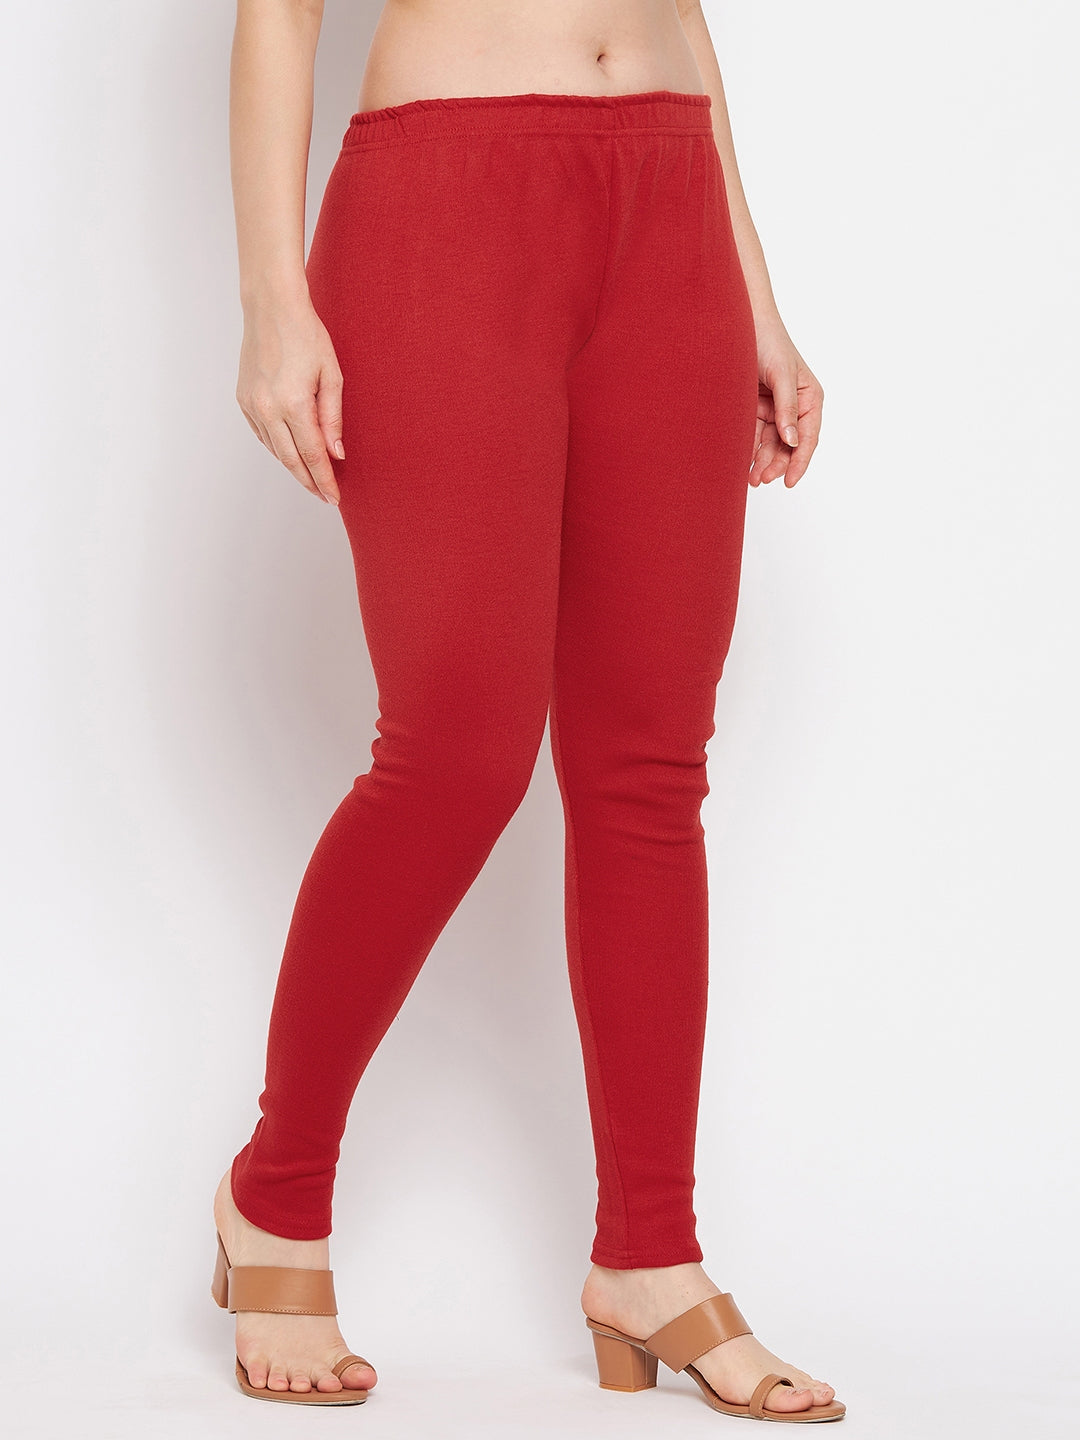 Clora Red Solid Woolen Leggings